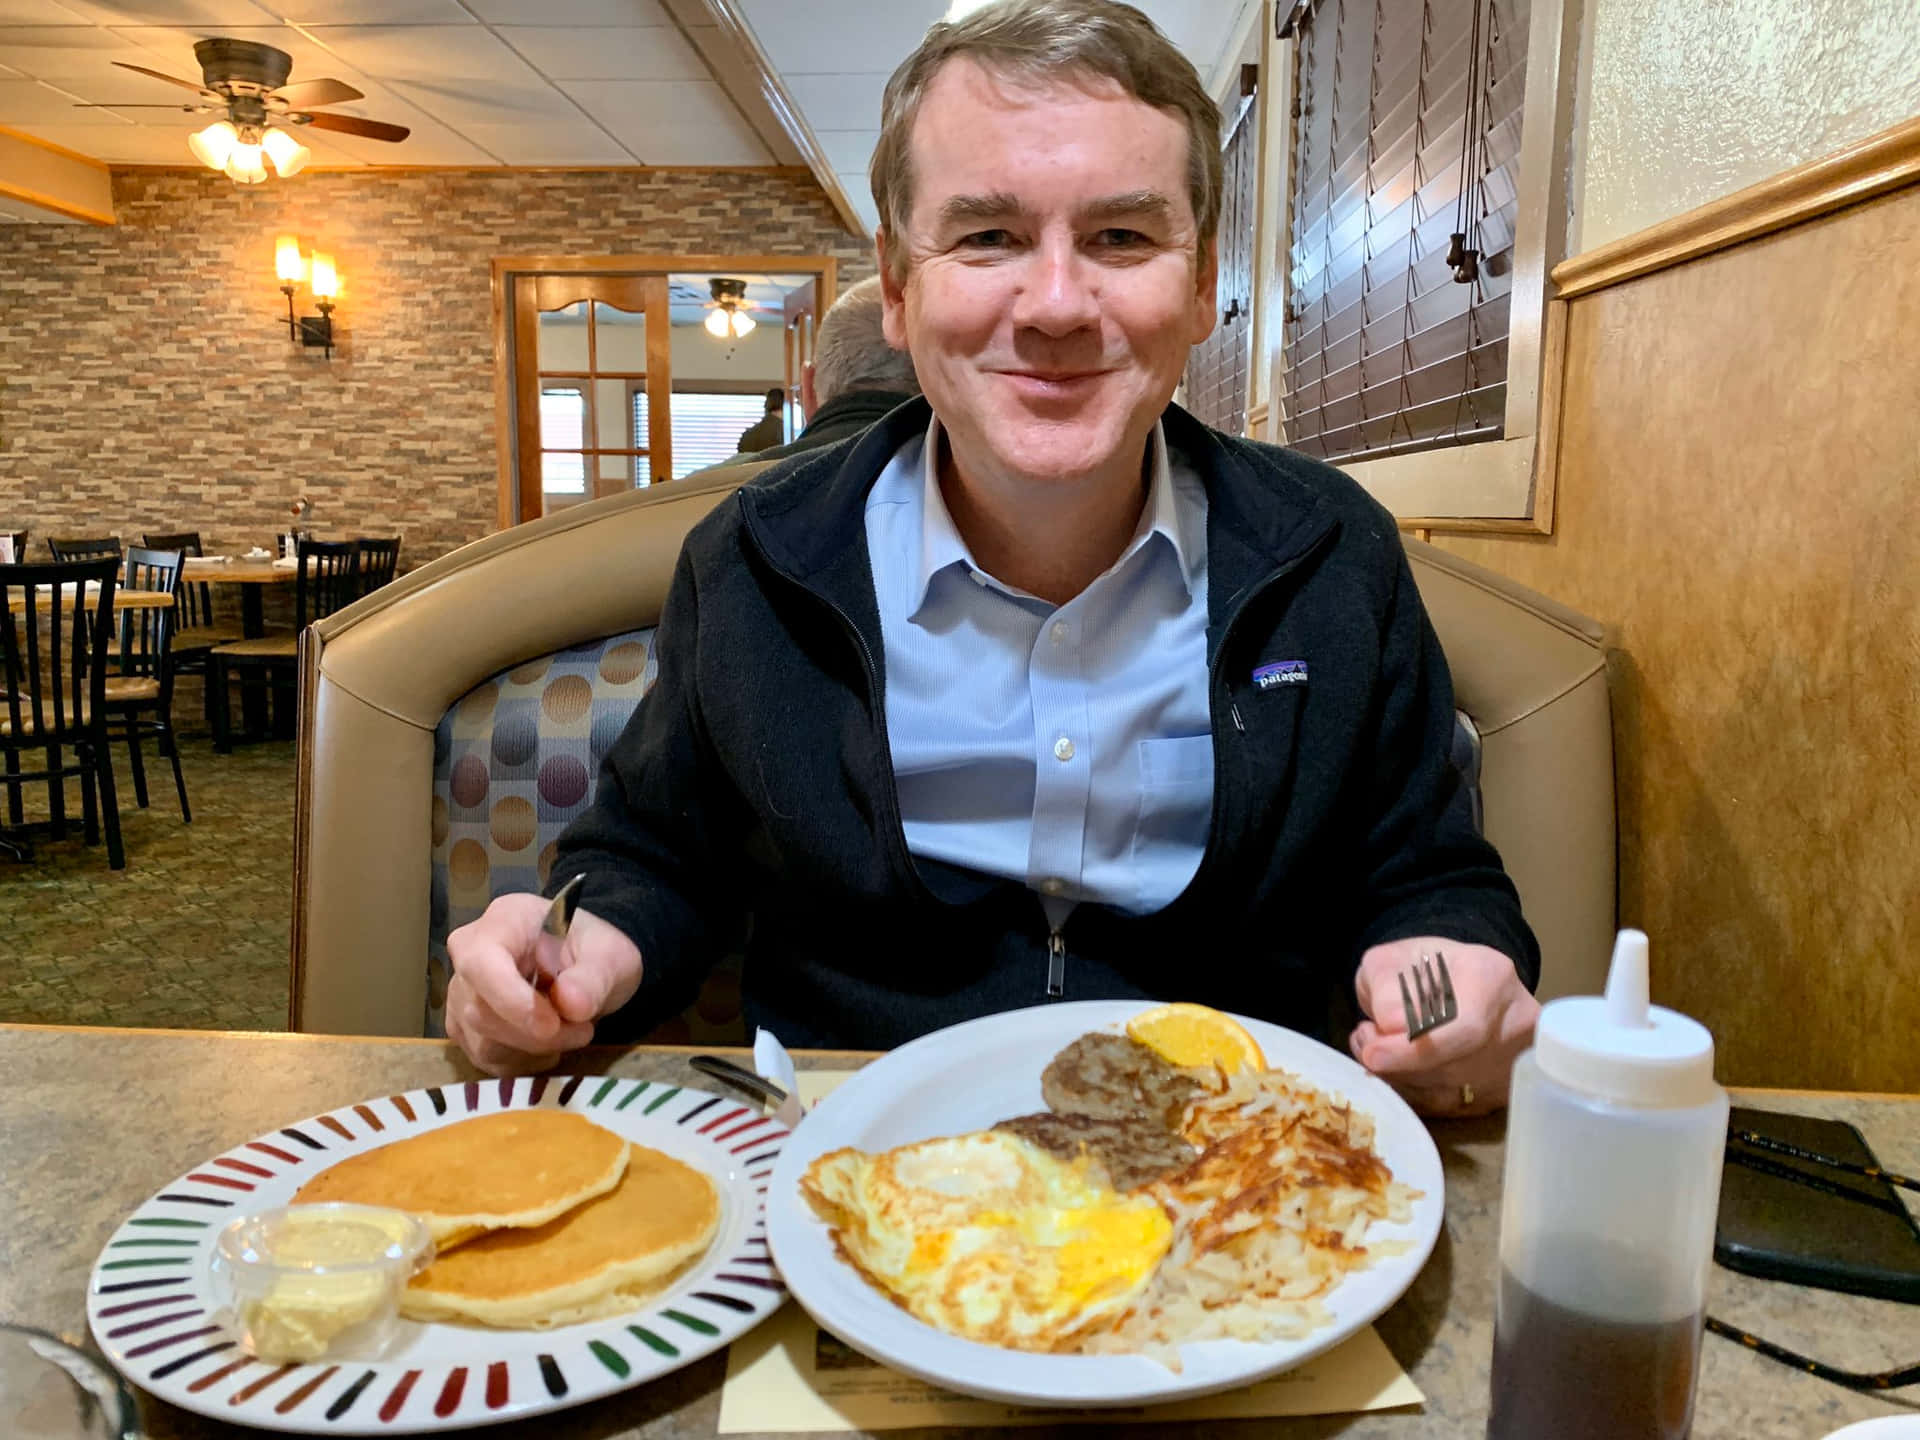 Senator Michael Bennet enjoys a healthy breakfast. Wallpaper